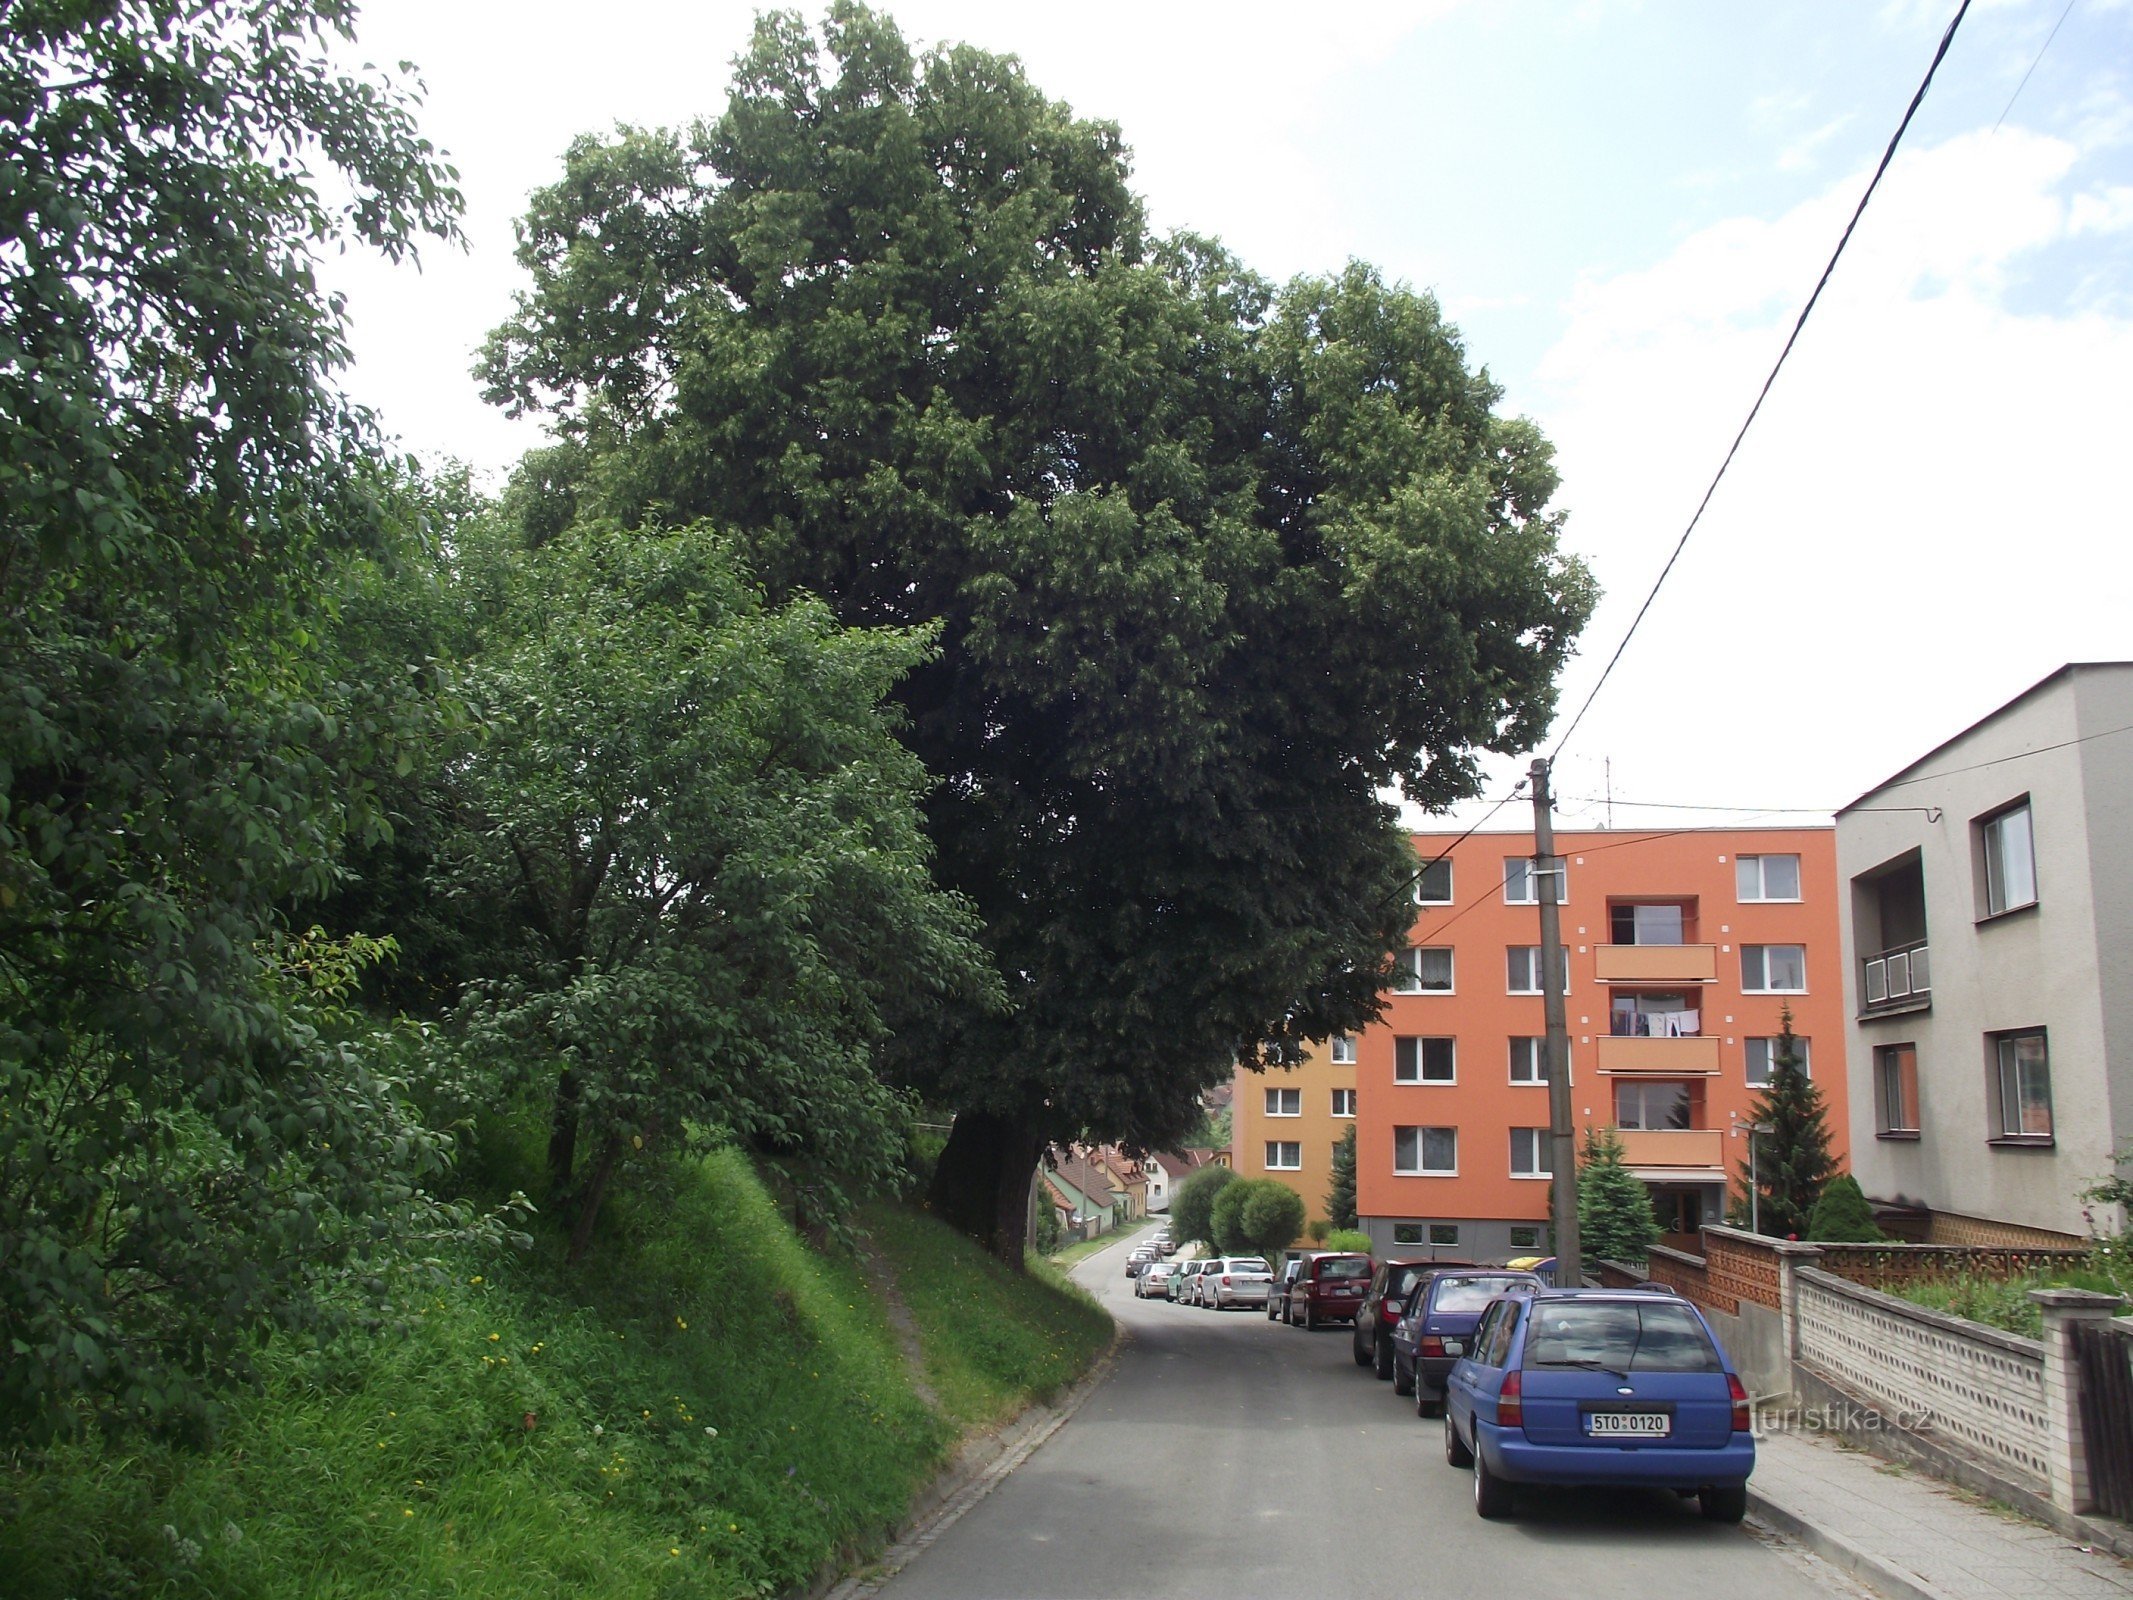 Vizovice - a memorial linden tree